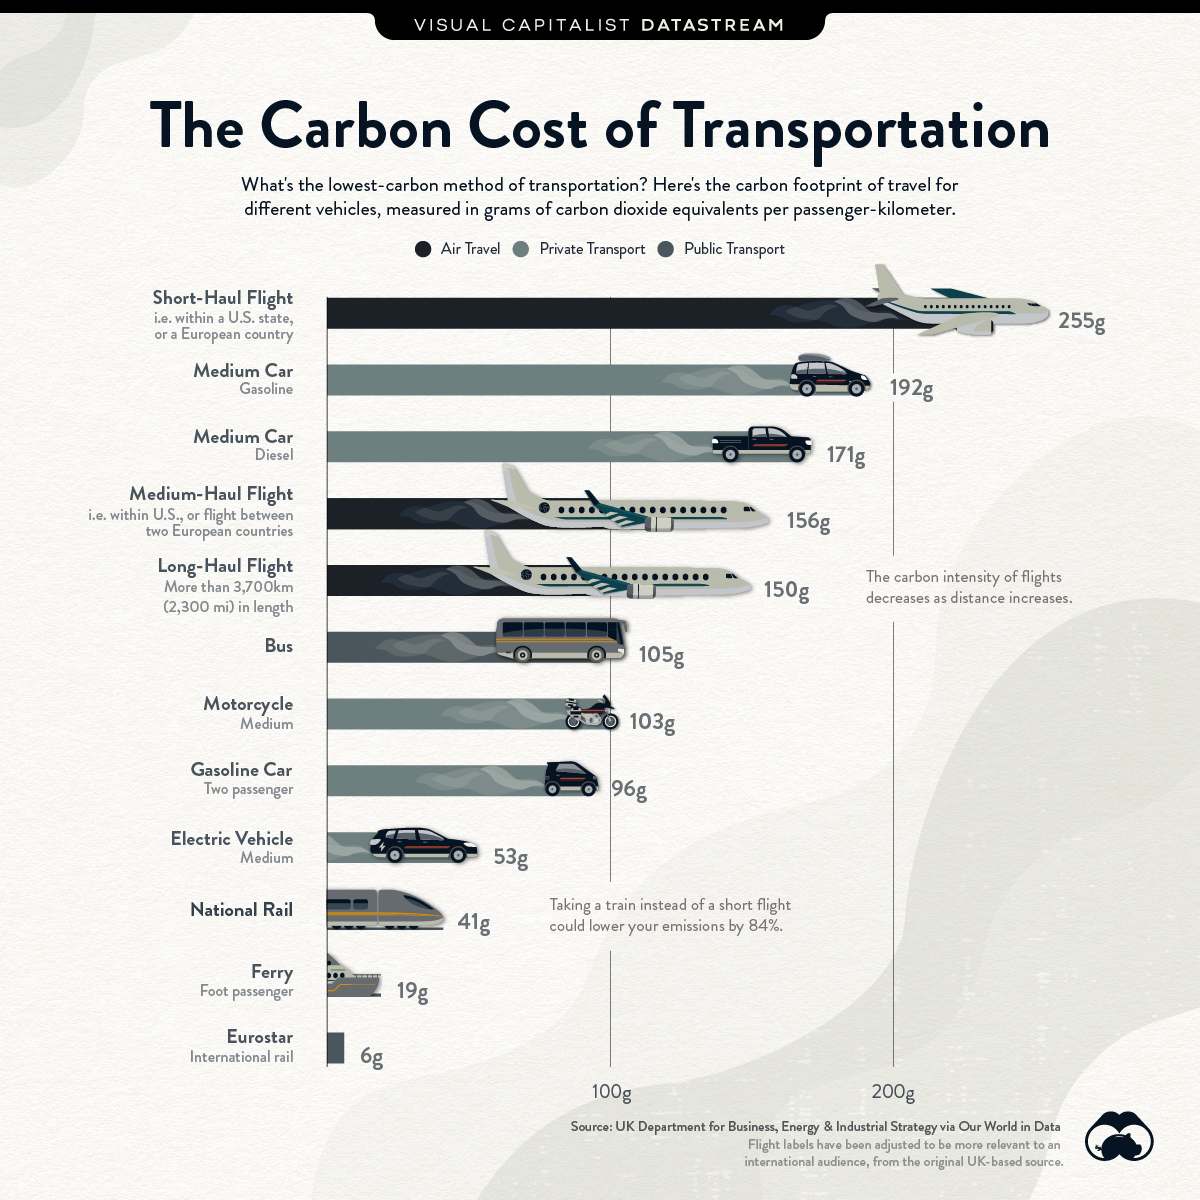 Comparing Carbon Footprint